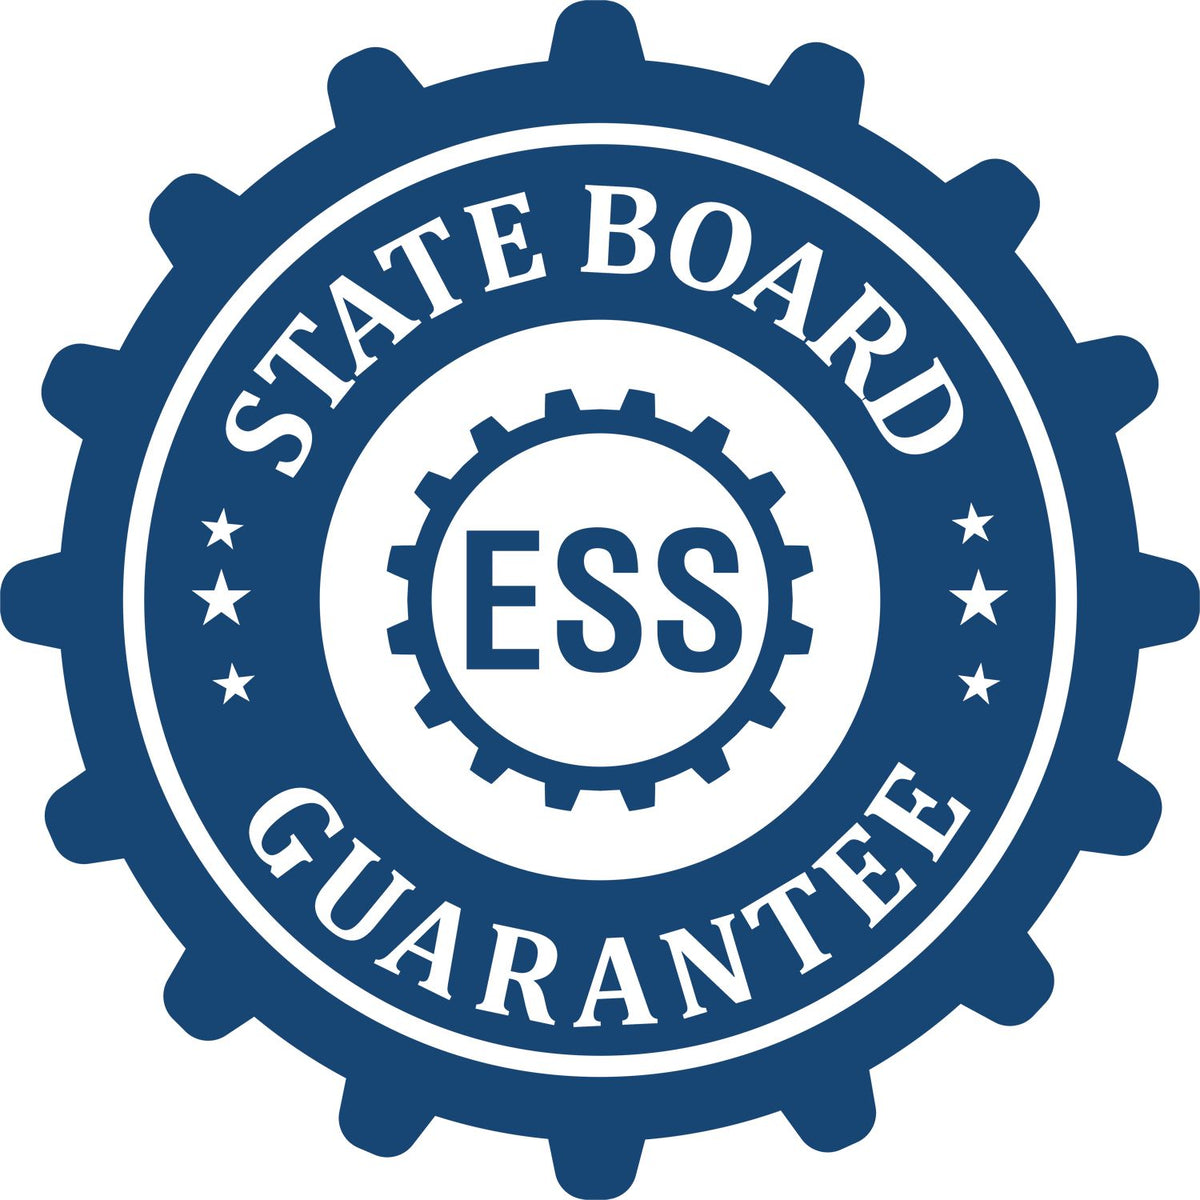 An emblem in a gear shape illustrating a state board guarantee for the Hybrid Kansas Land Surveyor Seal